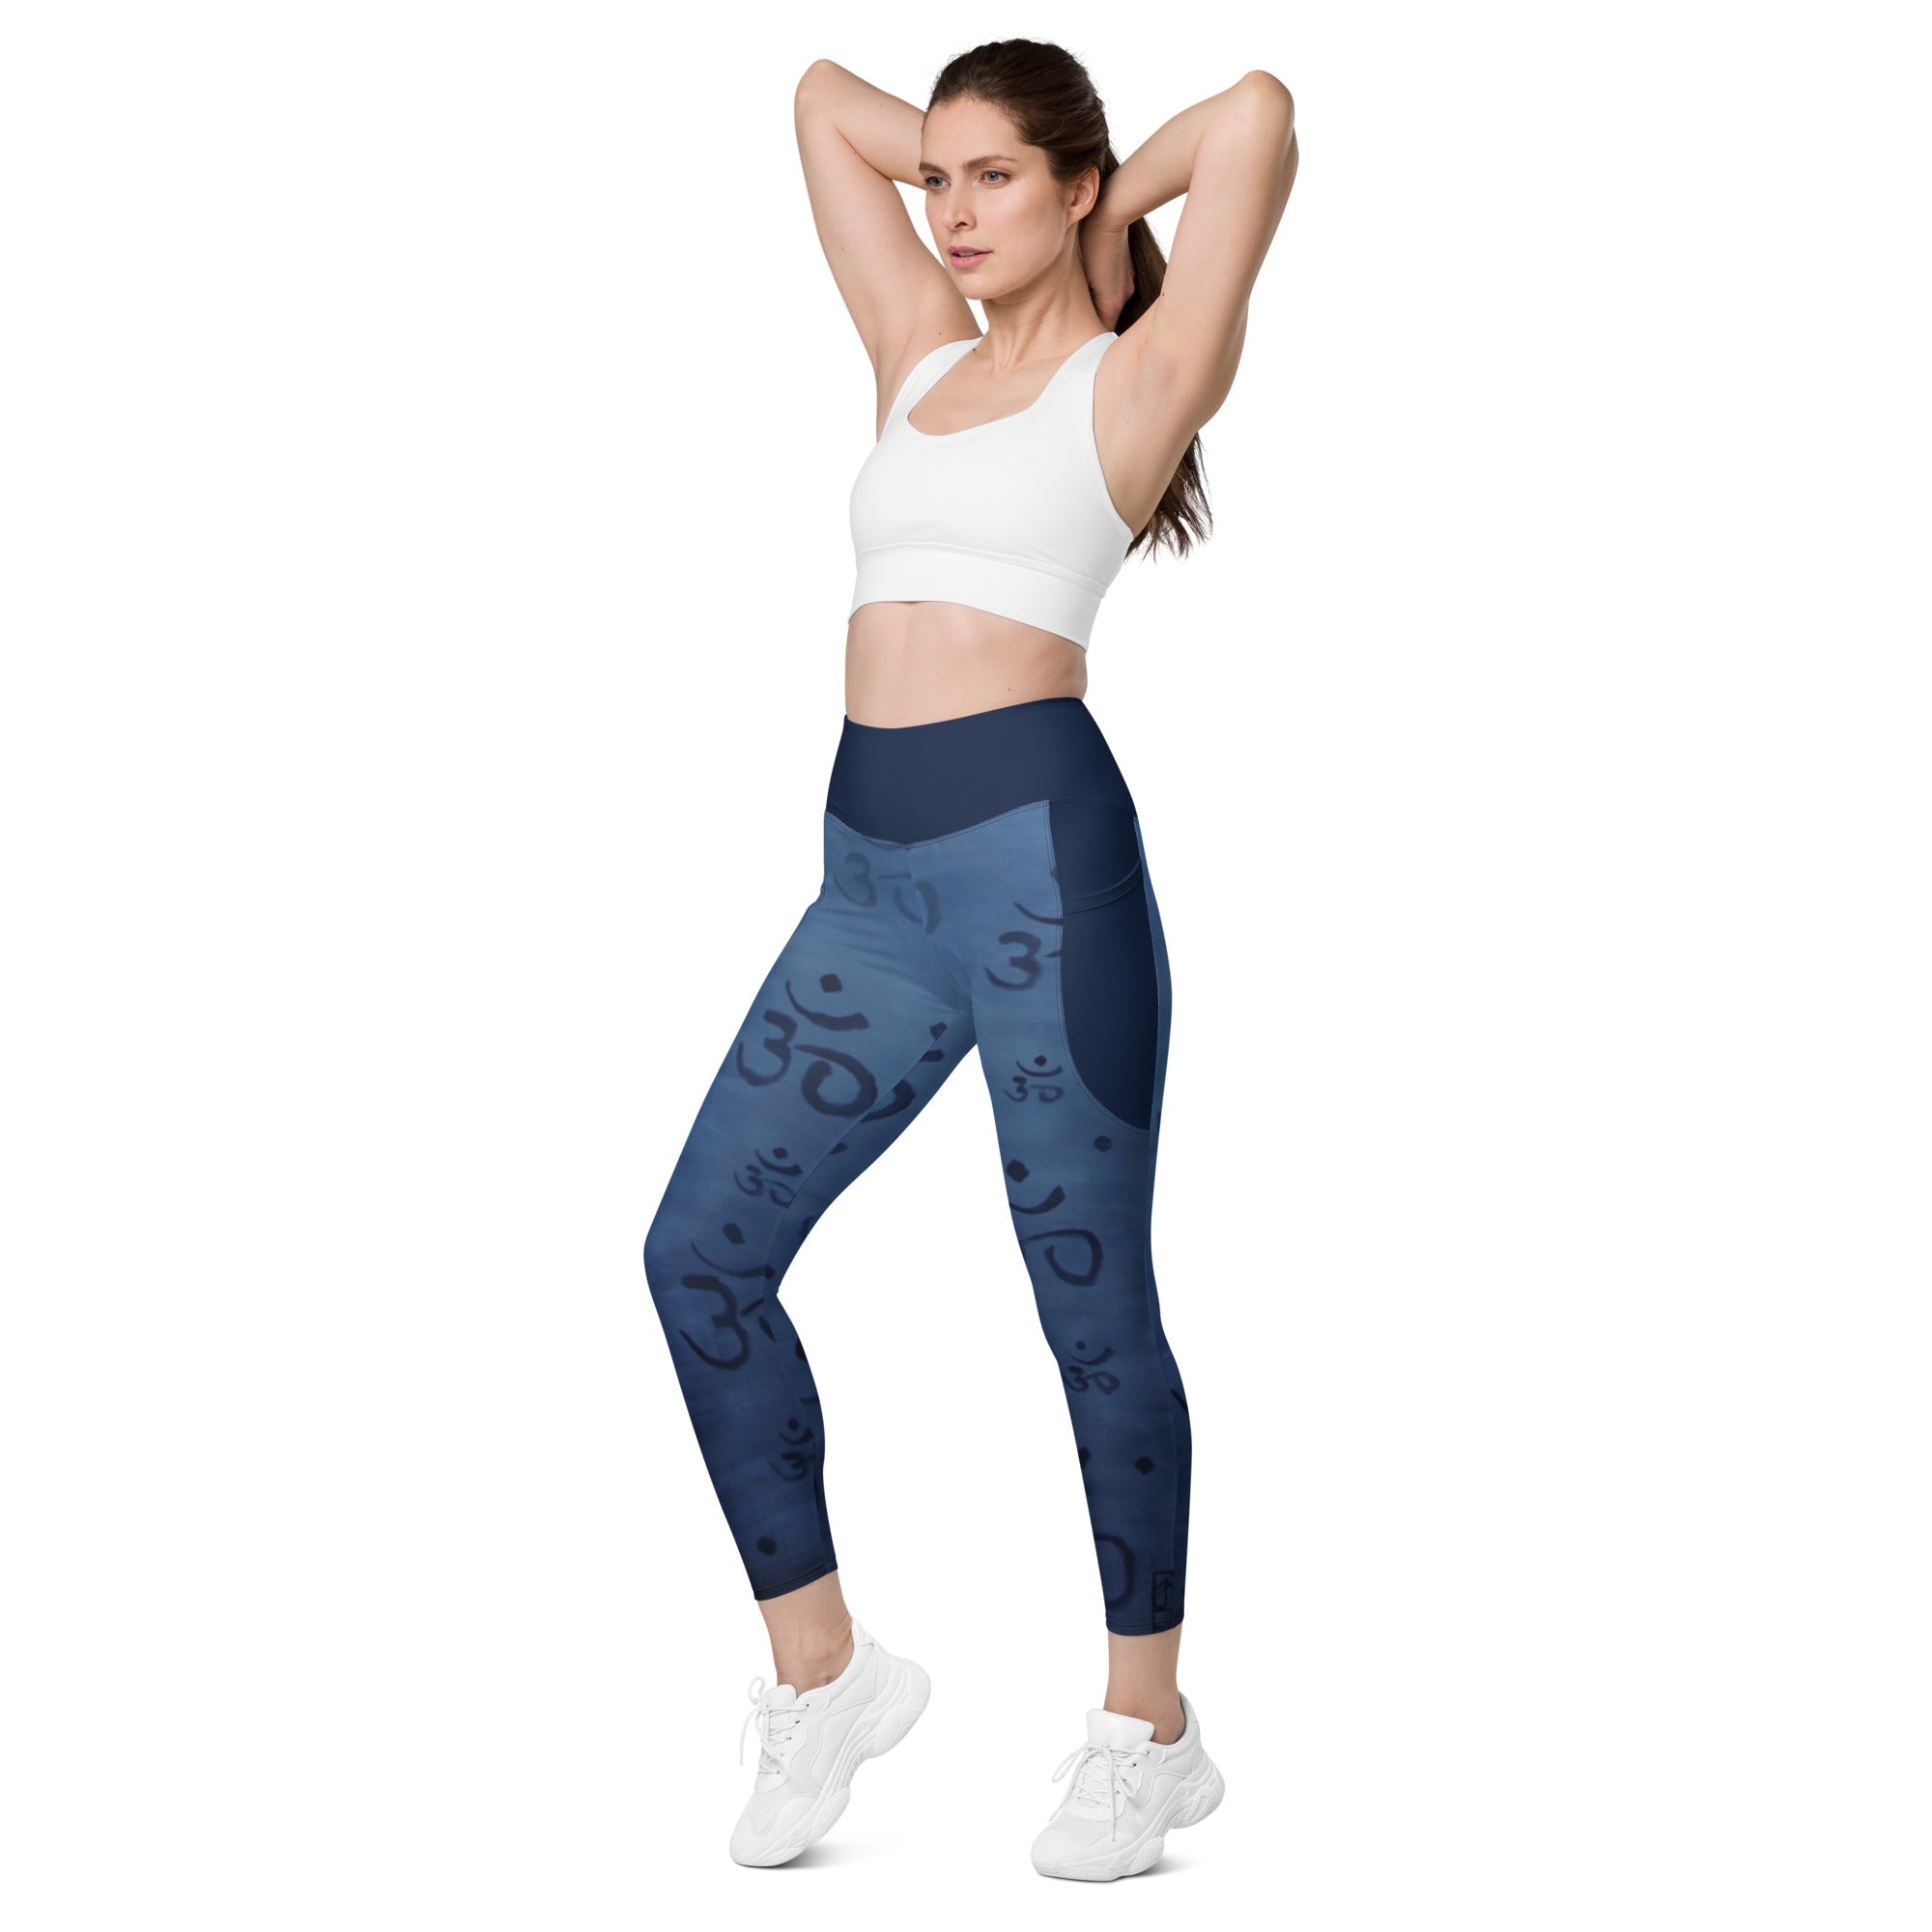 OM - Leggings with pockets - Yoga Clothes – Julia Michelle Dawson